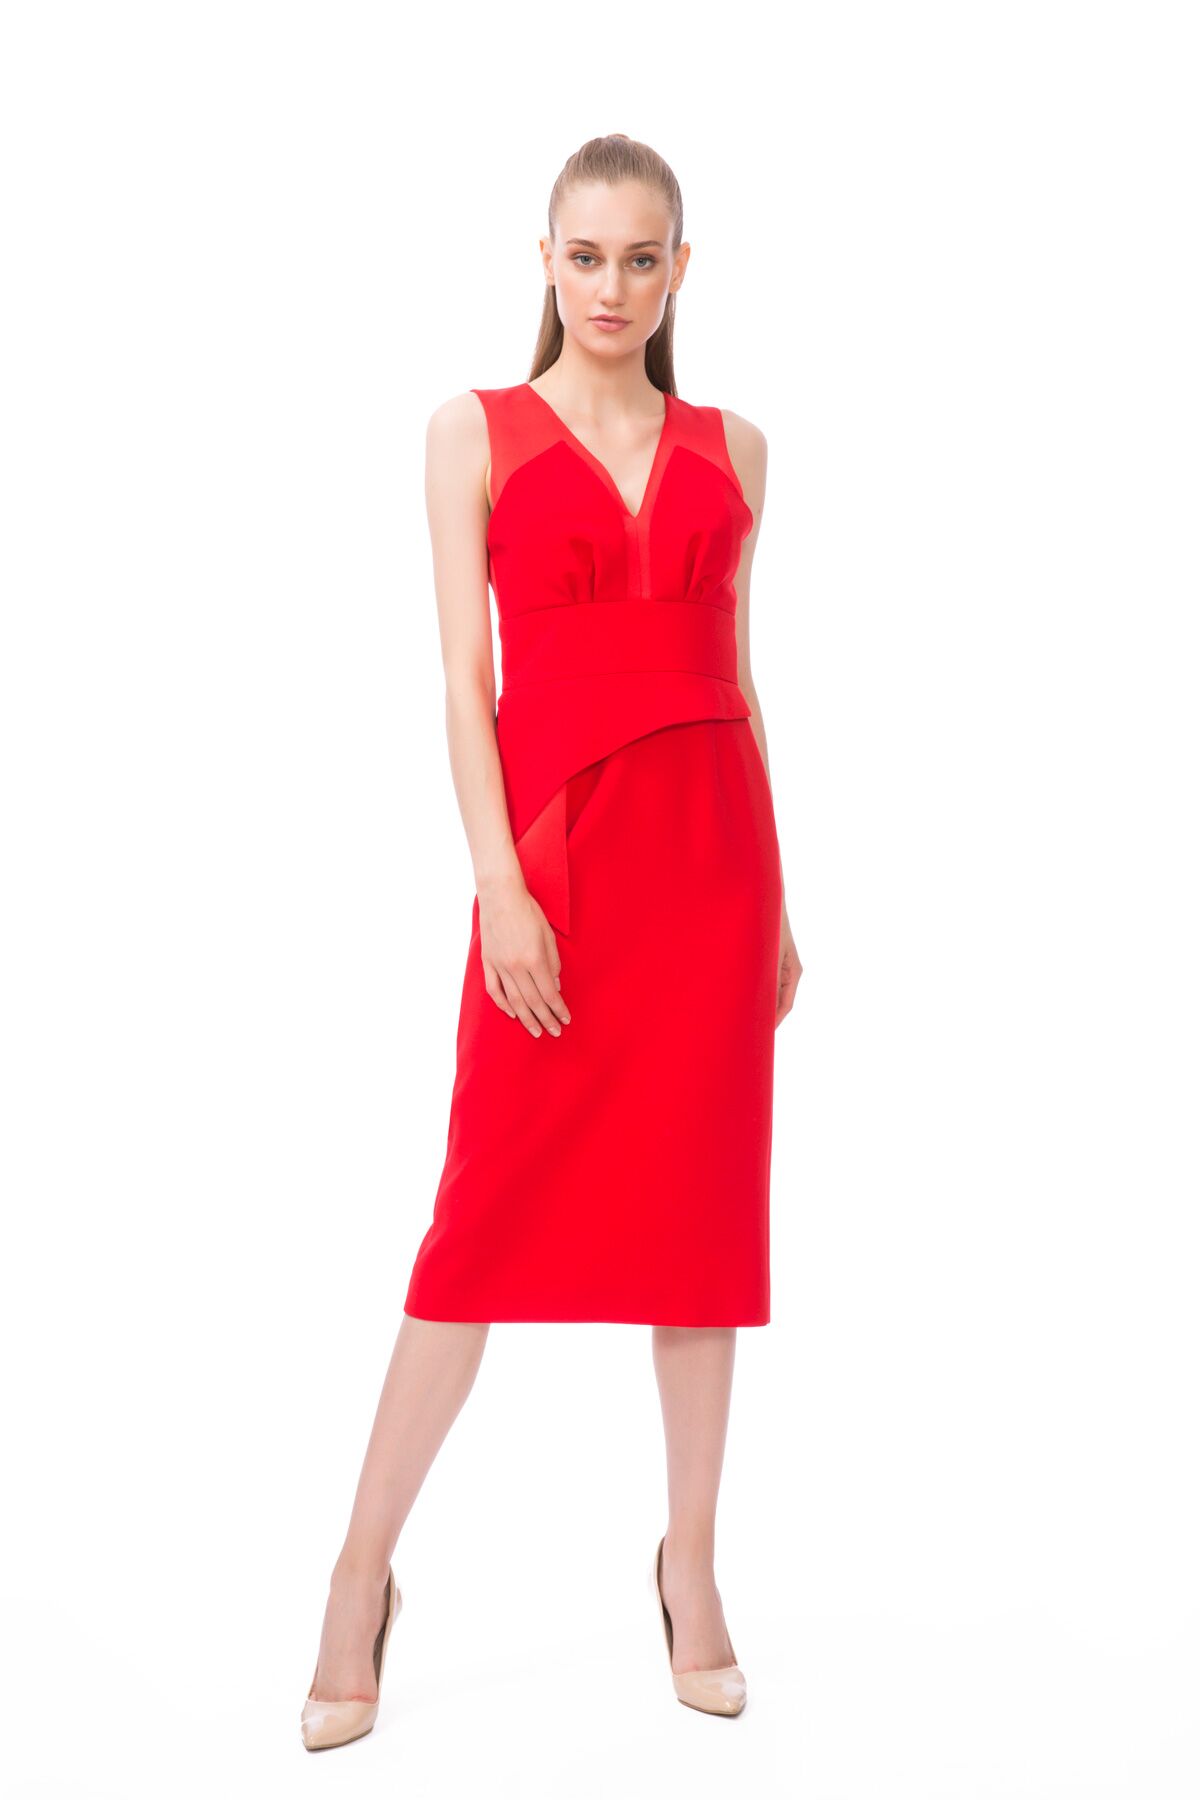  GIZIA - V Neck Sleeveless Midi Length Red Dress